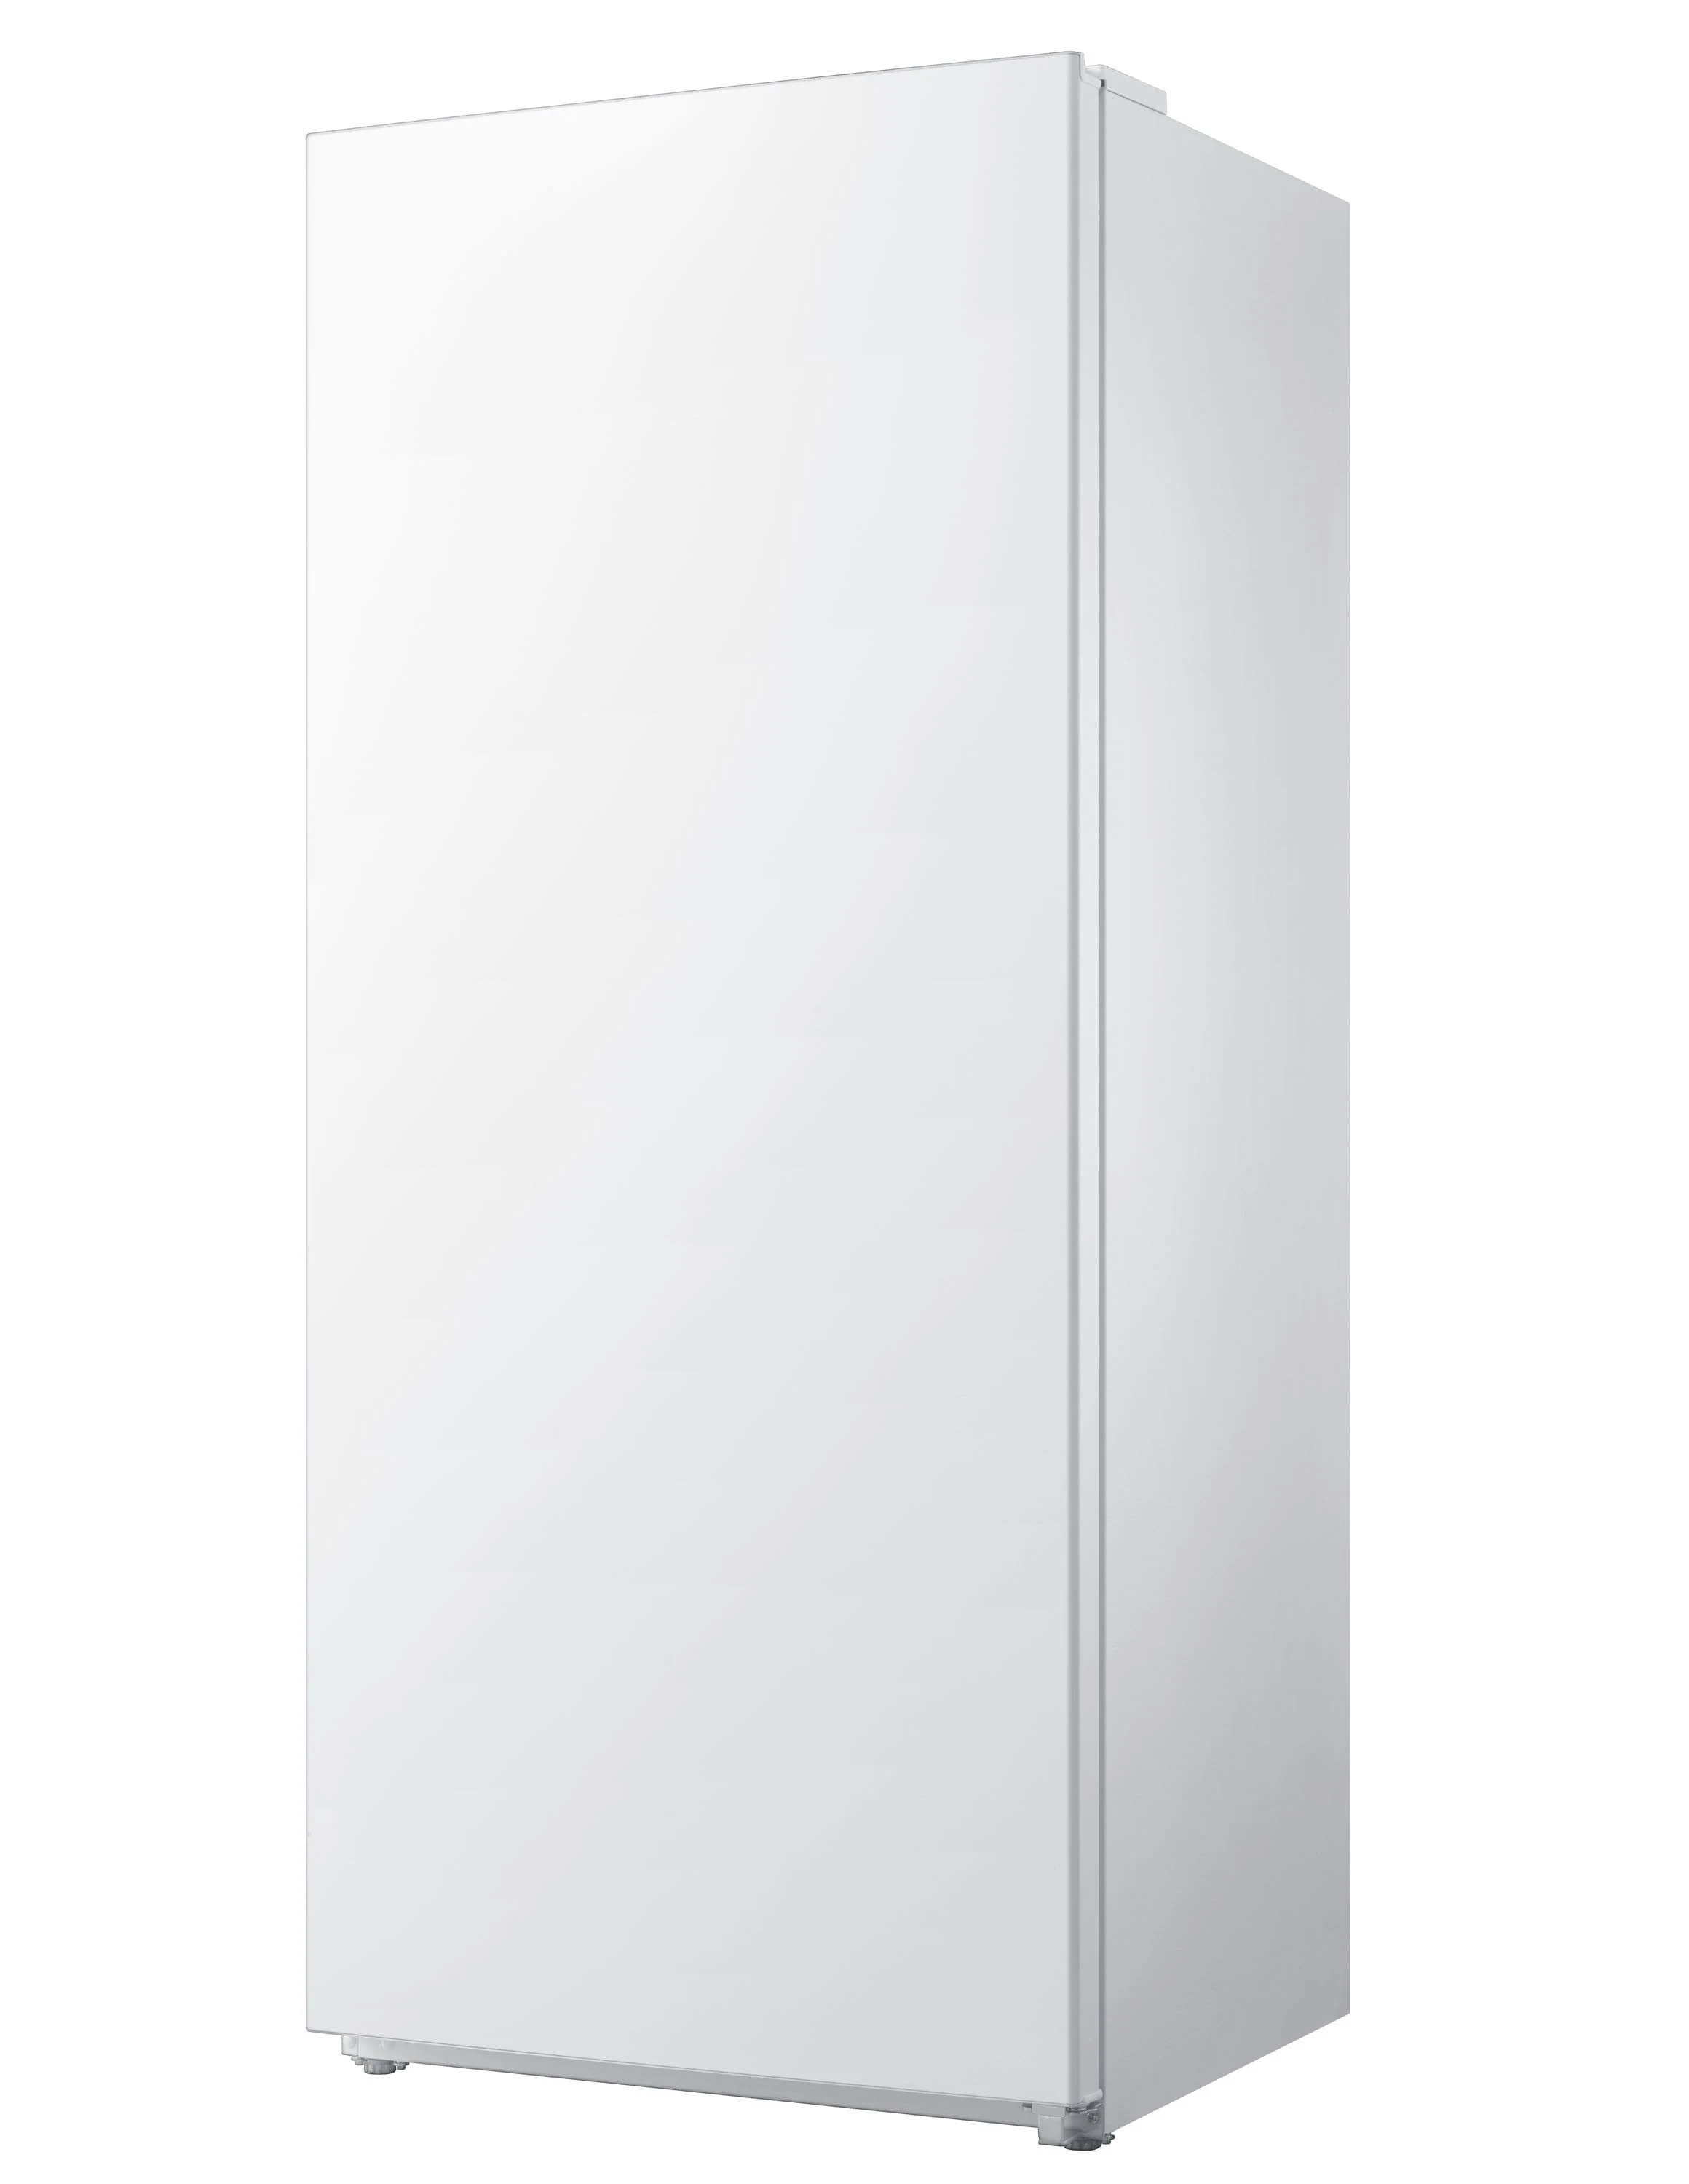 Techomey Upright Freezer 21 Cu.Ft, Stand Up Convertible Freezer